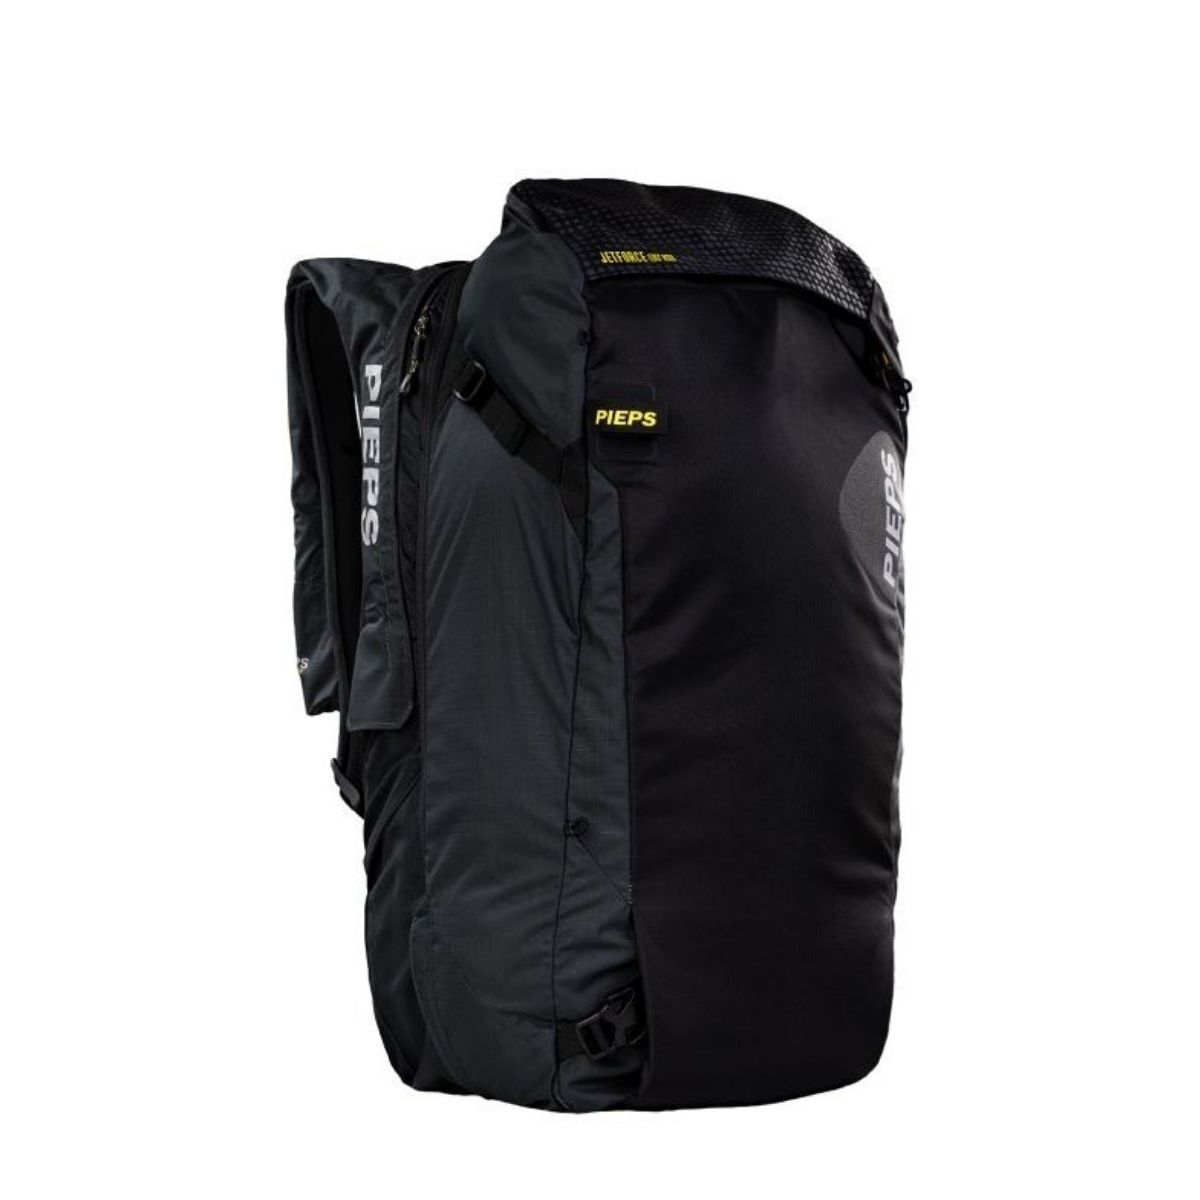 Pieps Jetforce Bt Pack 35 - Avalanche backpack